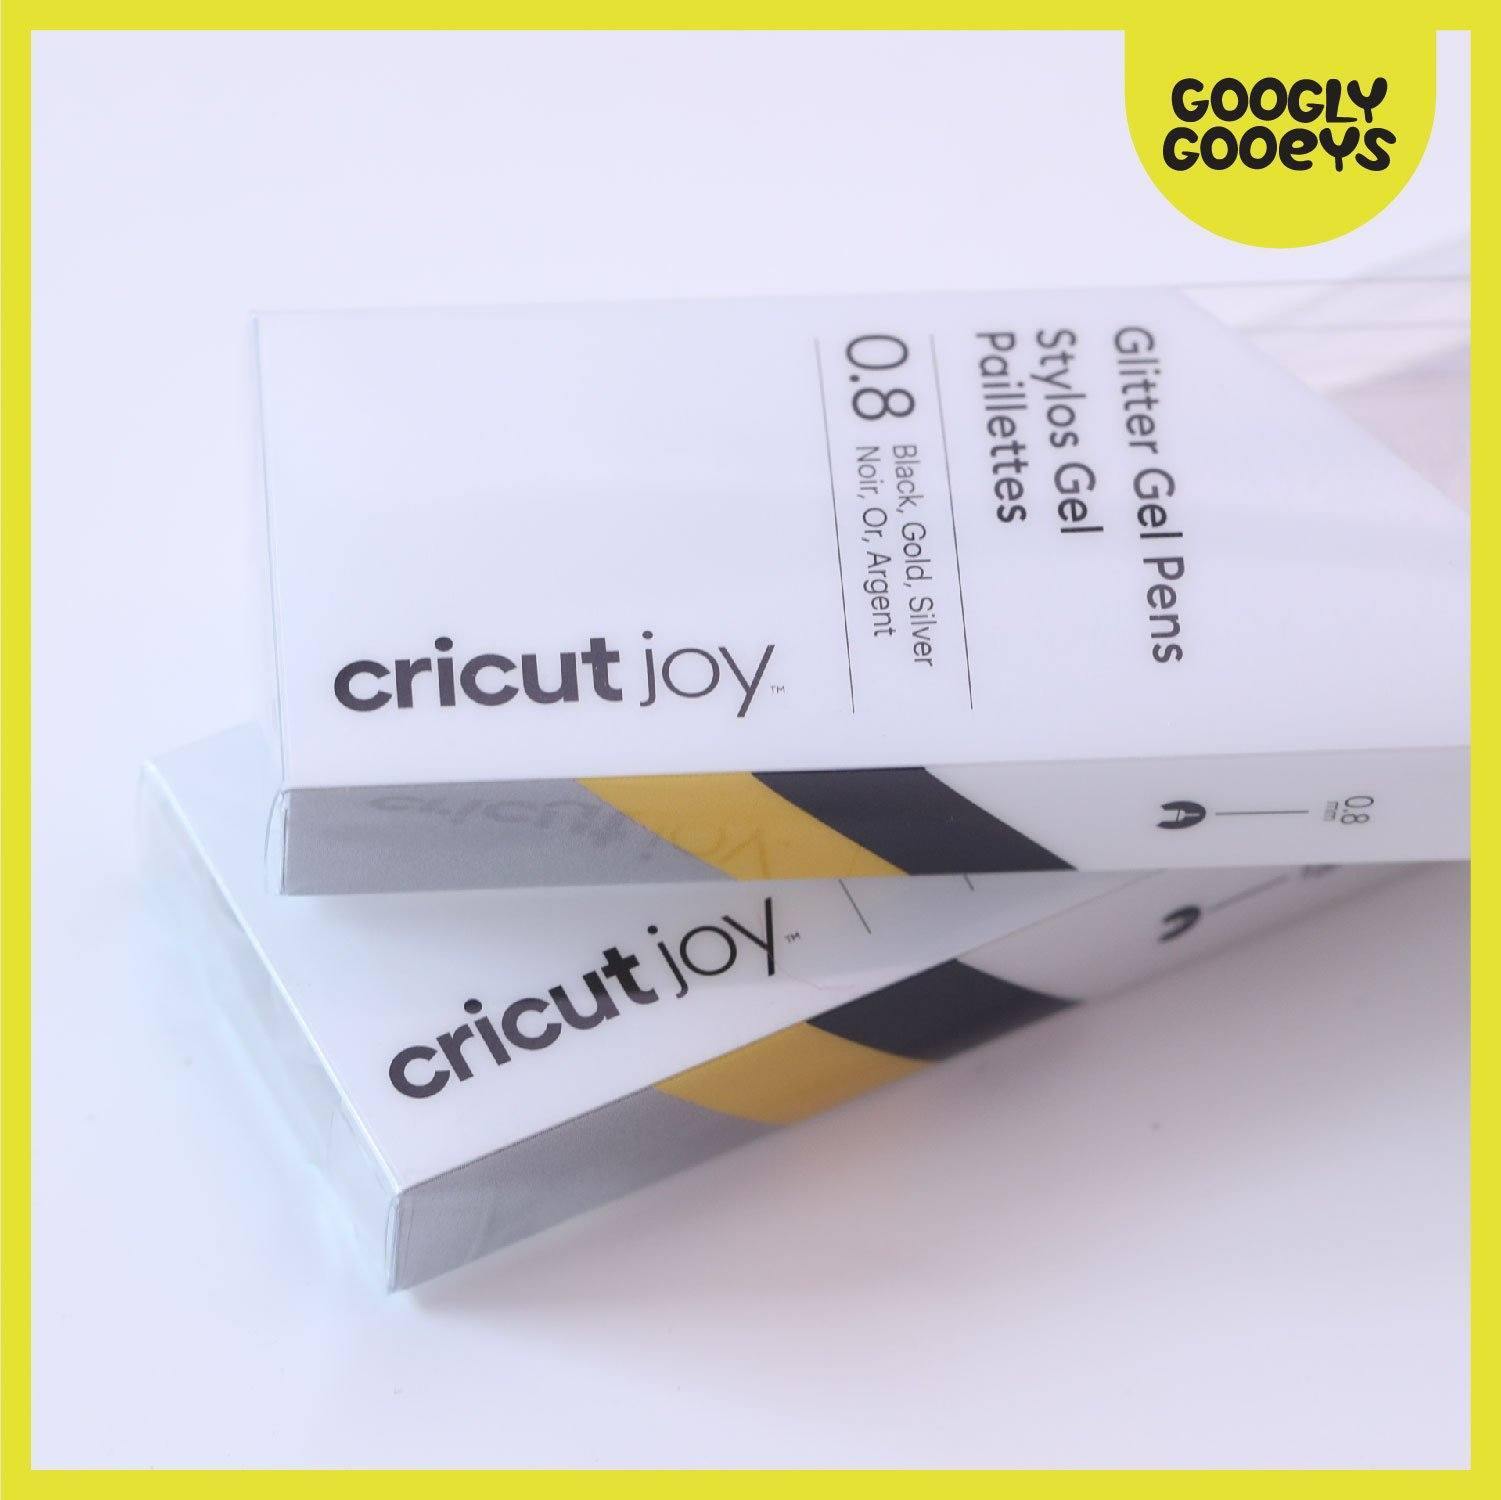 Cricut Joy Glitter Gel Pens, 0.8 mm (3 ct) | Black, Gold, Silver-Cricut Joy Accessories-[Product vendor]-GooglyGooeys-DIY-Crafts-Philippines